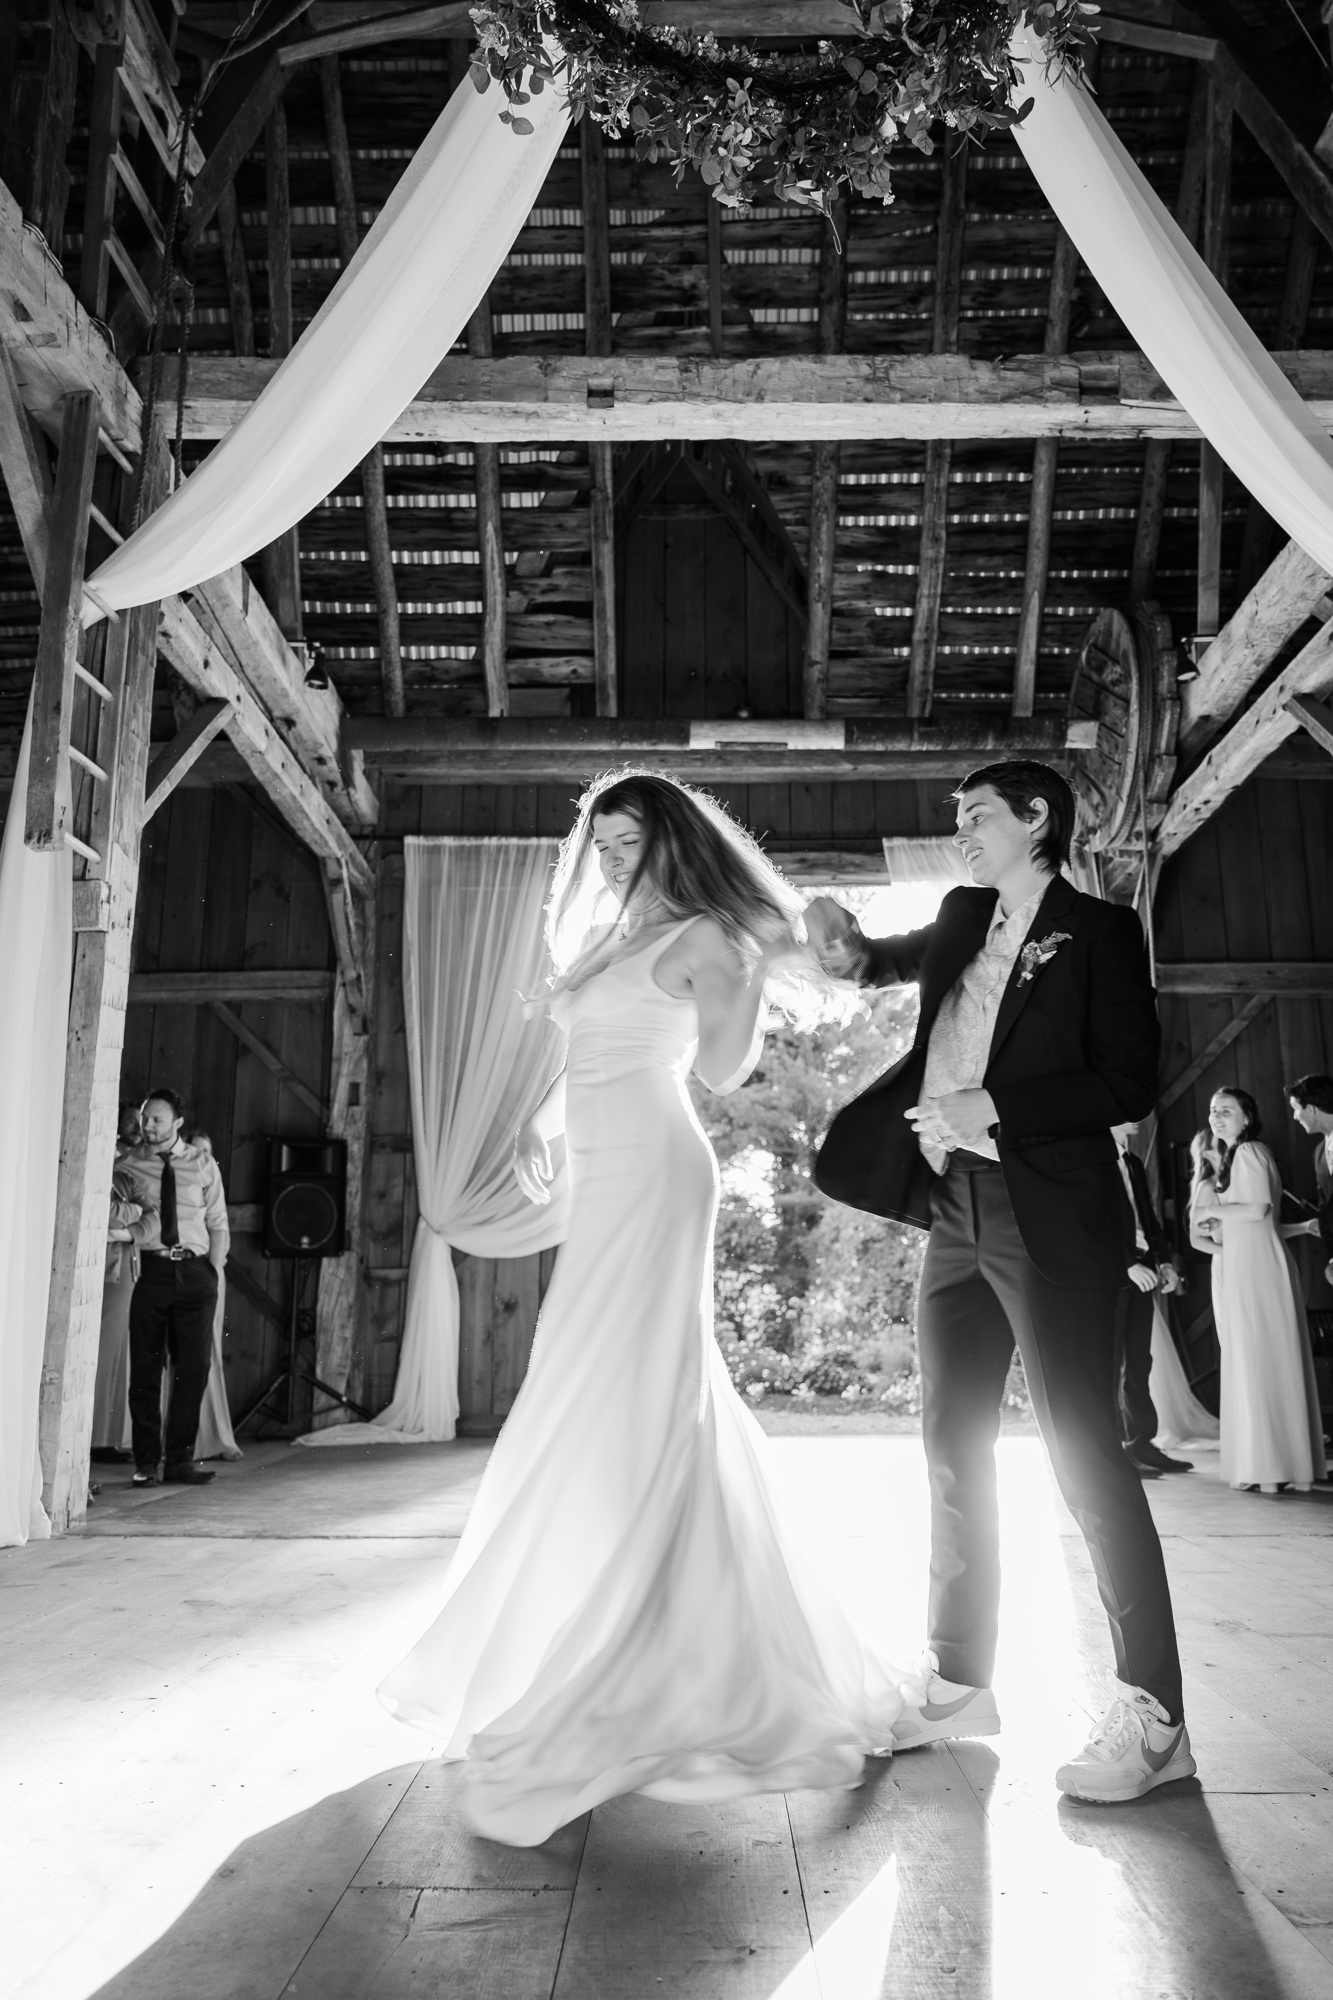 Perfect Wedding at Maple Meadows Farm, Canada